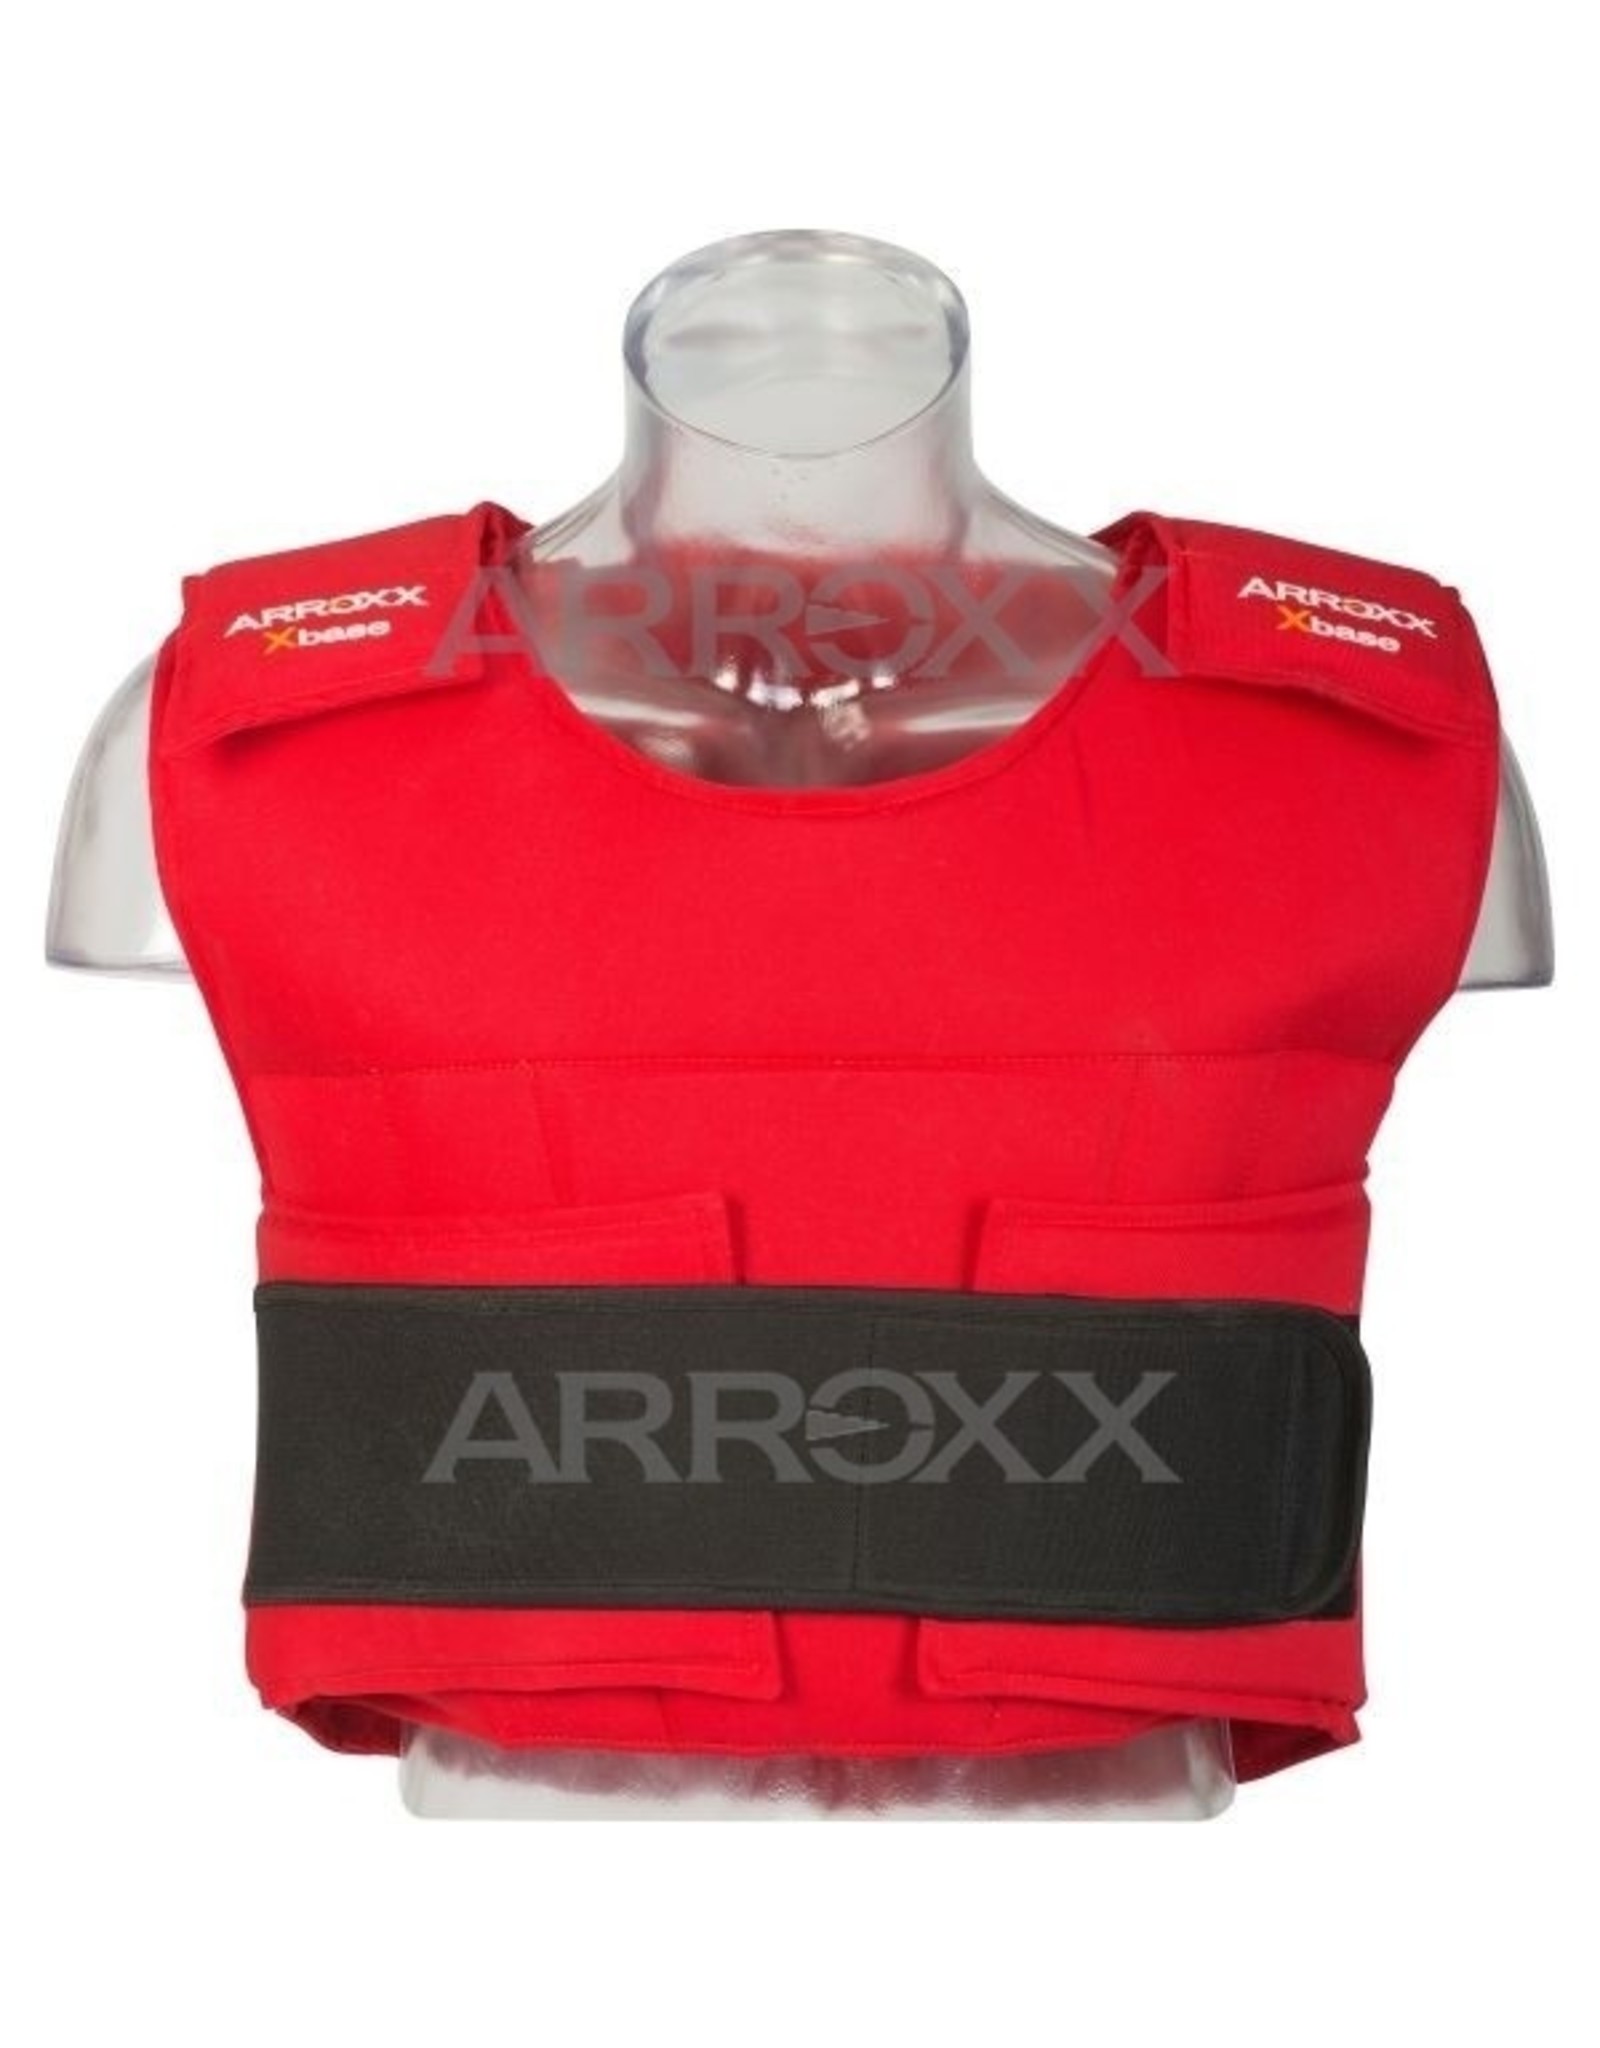 Arroxx Arroxx body protector Xbase Red